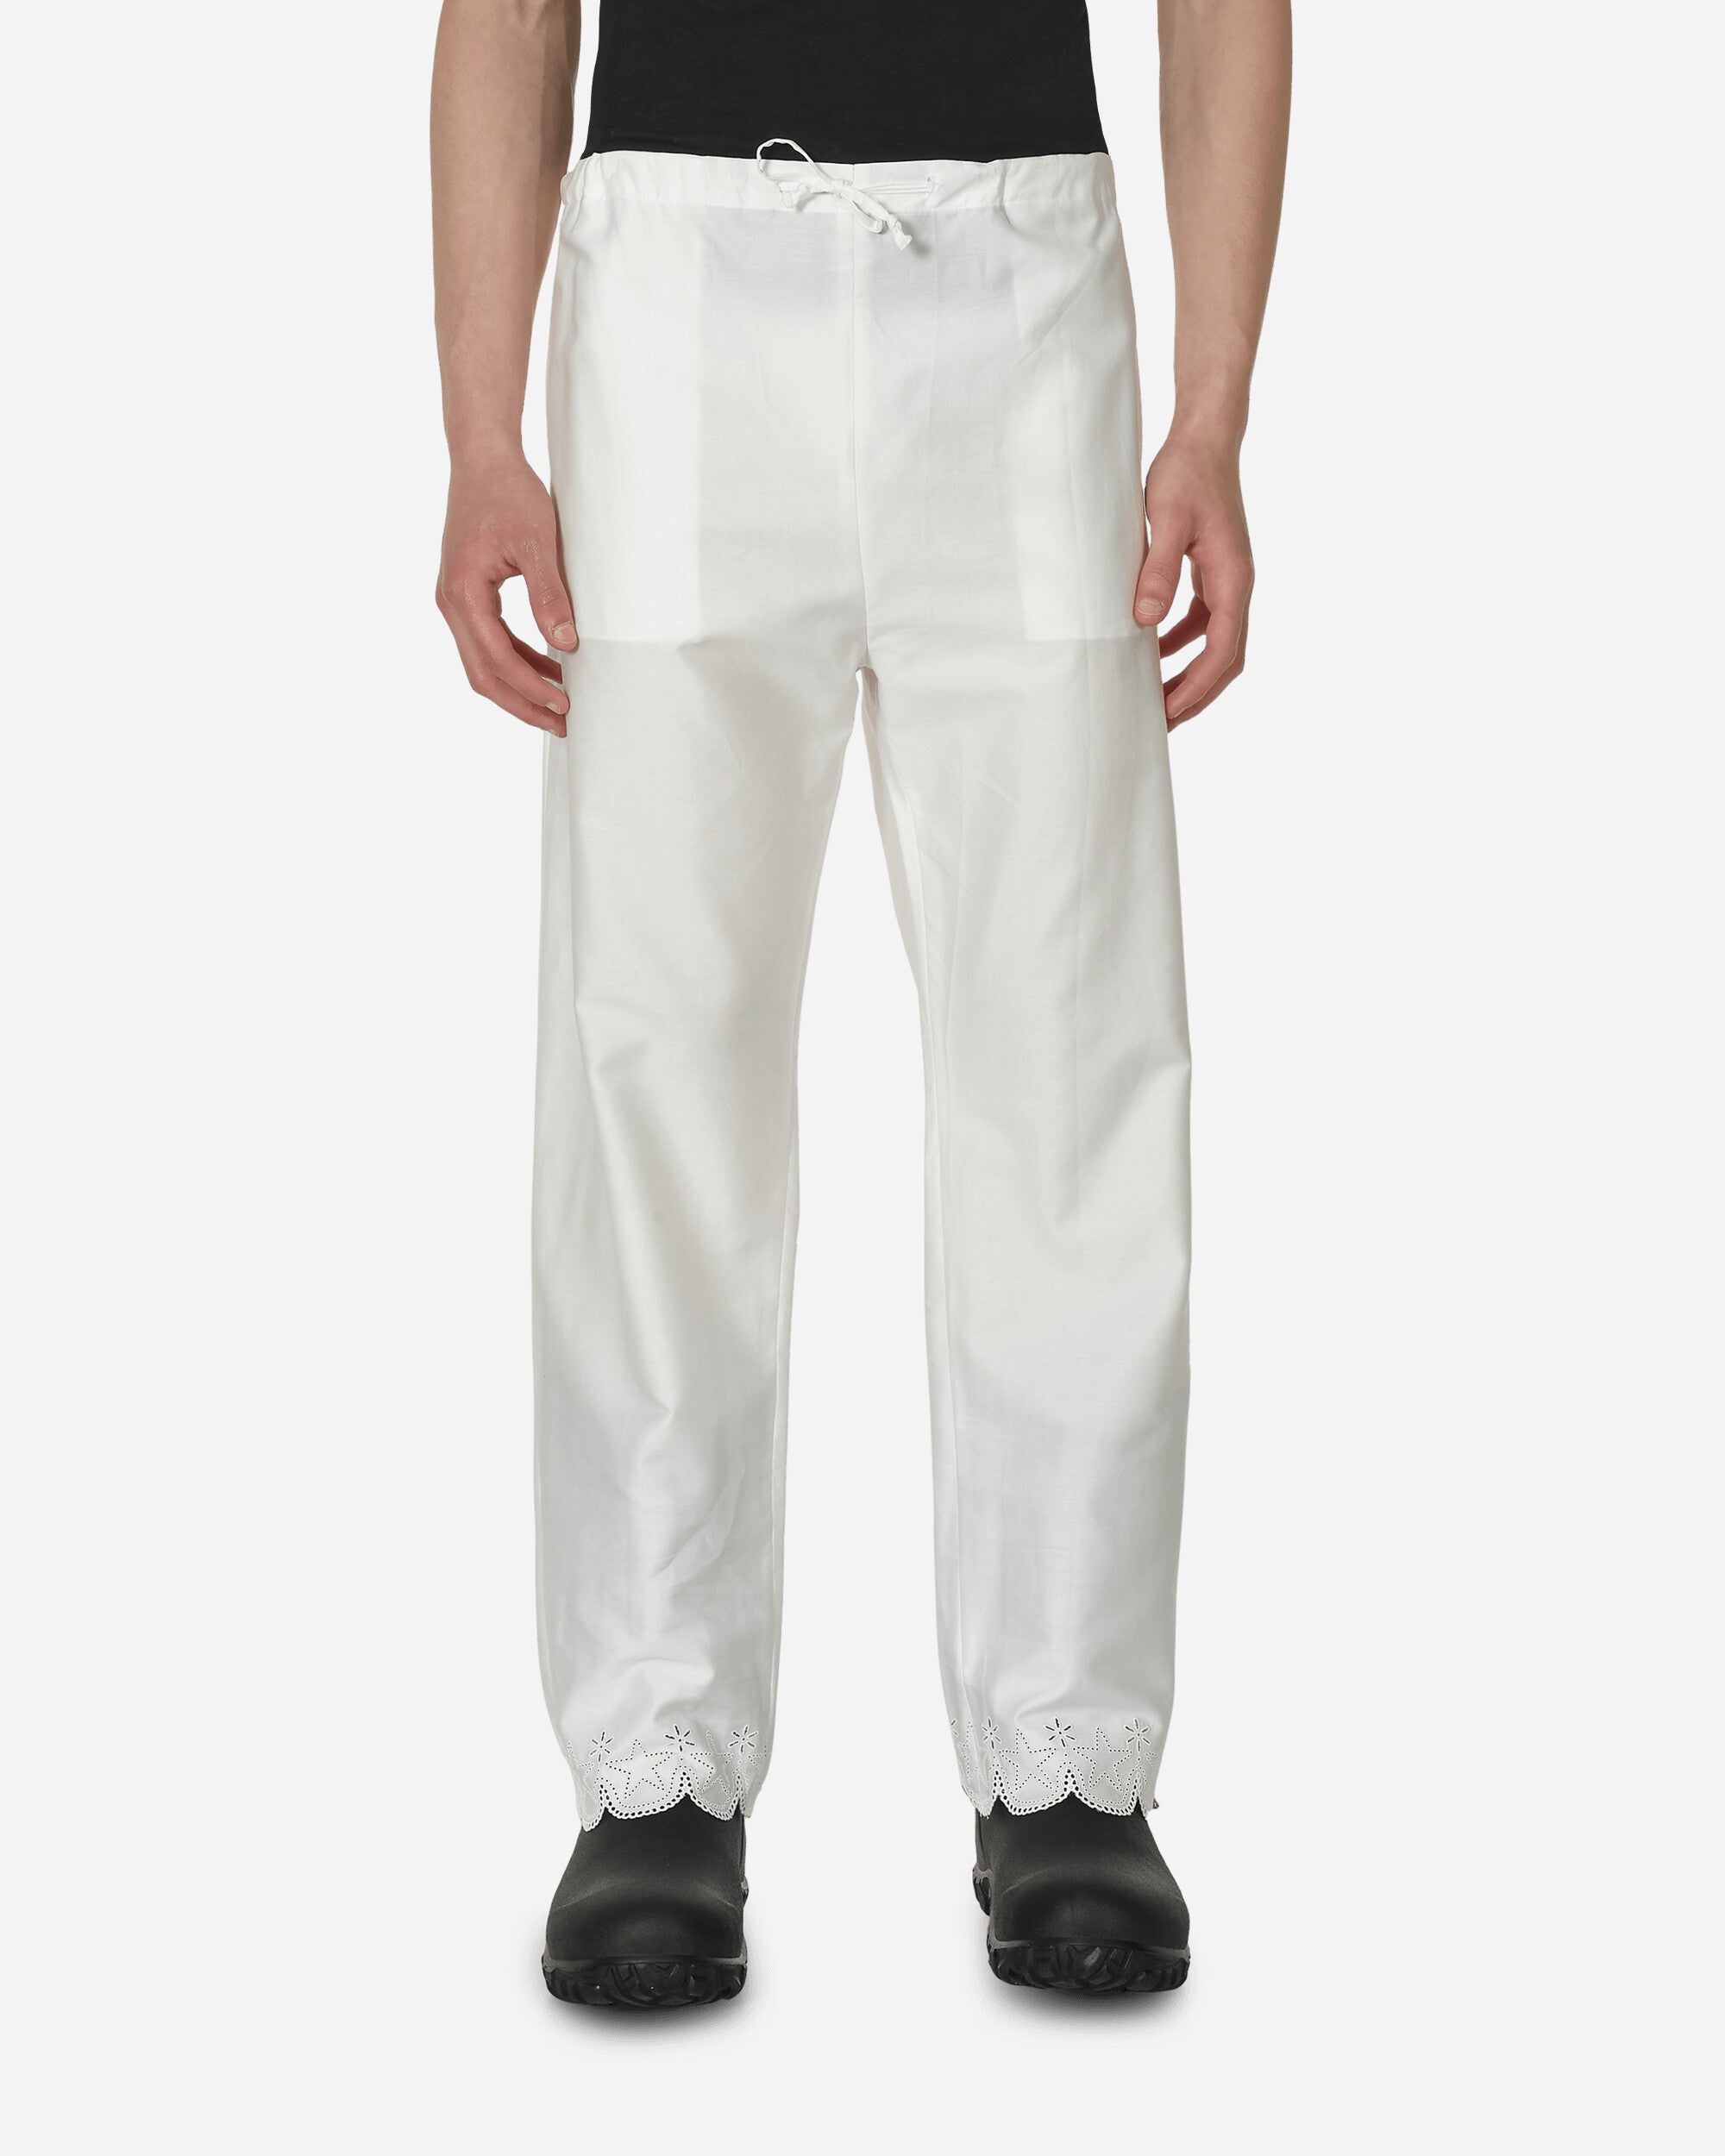 Sky High Farm Unisex Silk Pantalette Woven White Pants Trousers SHF03P107 1